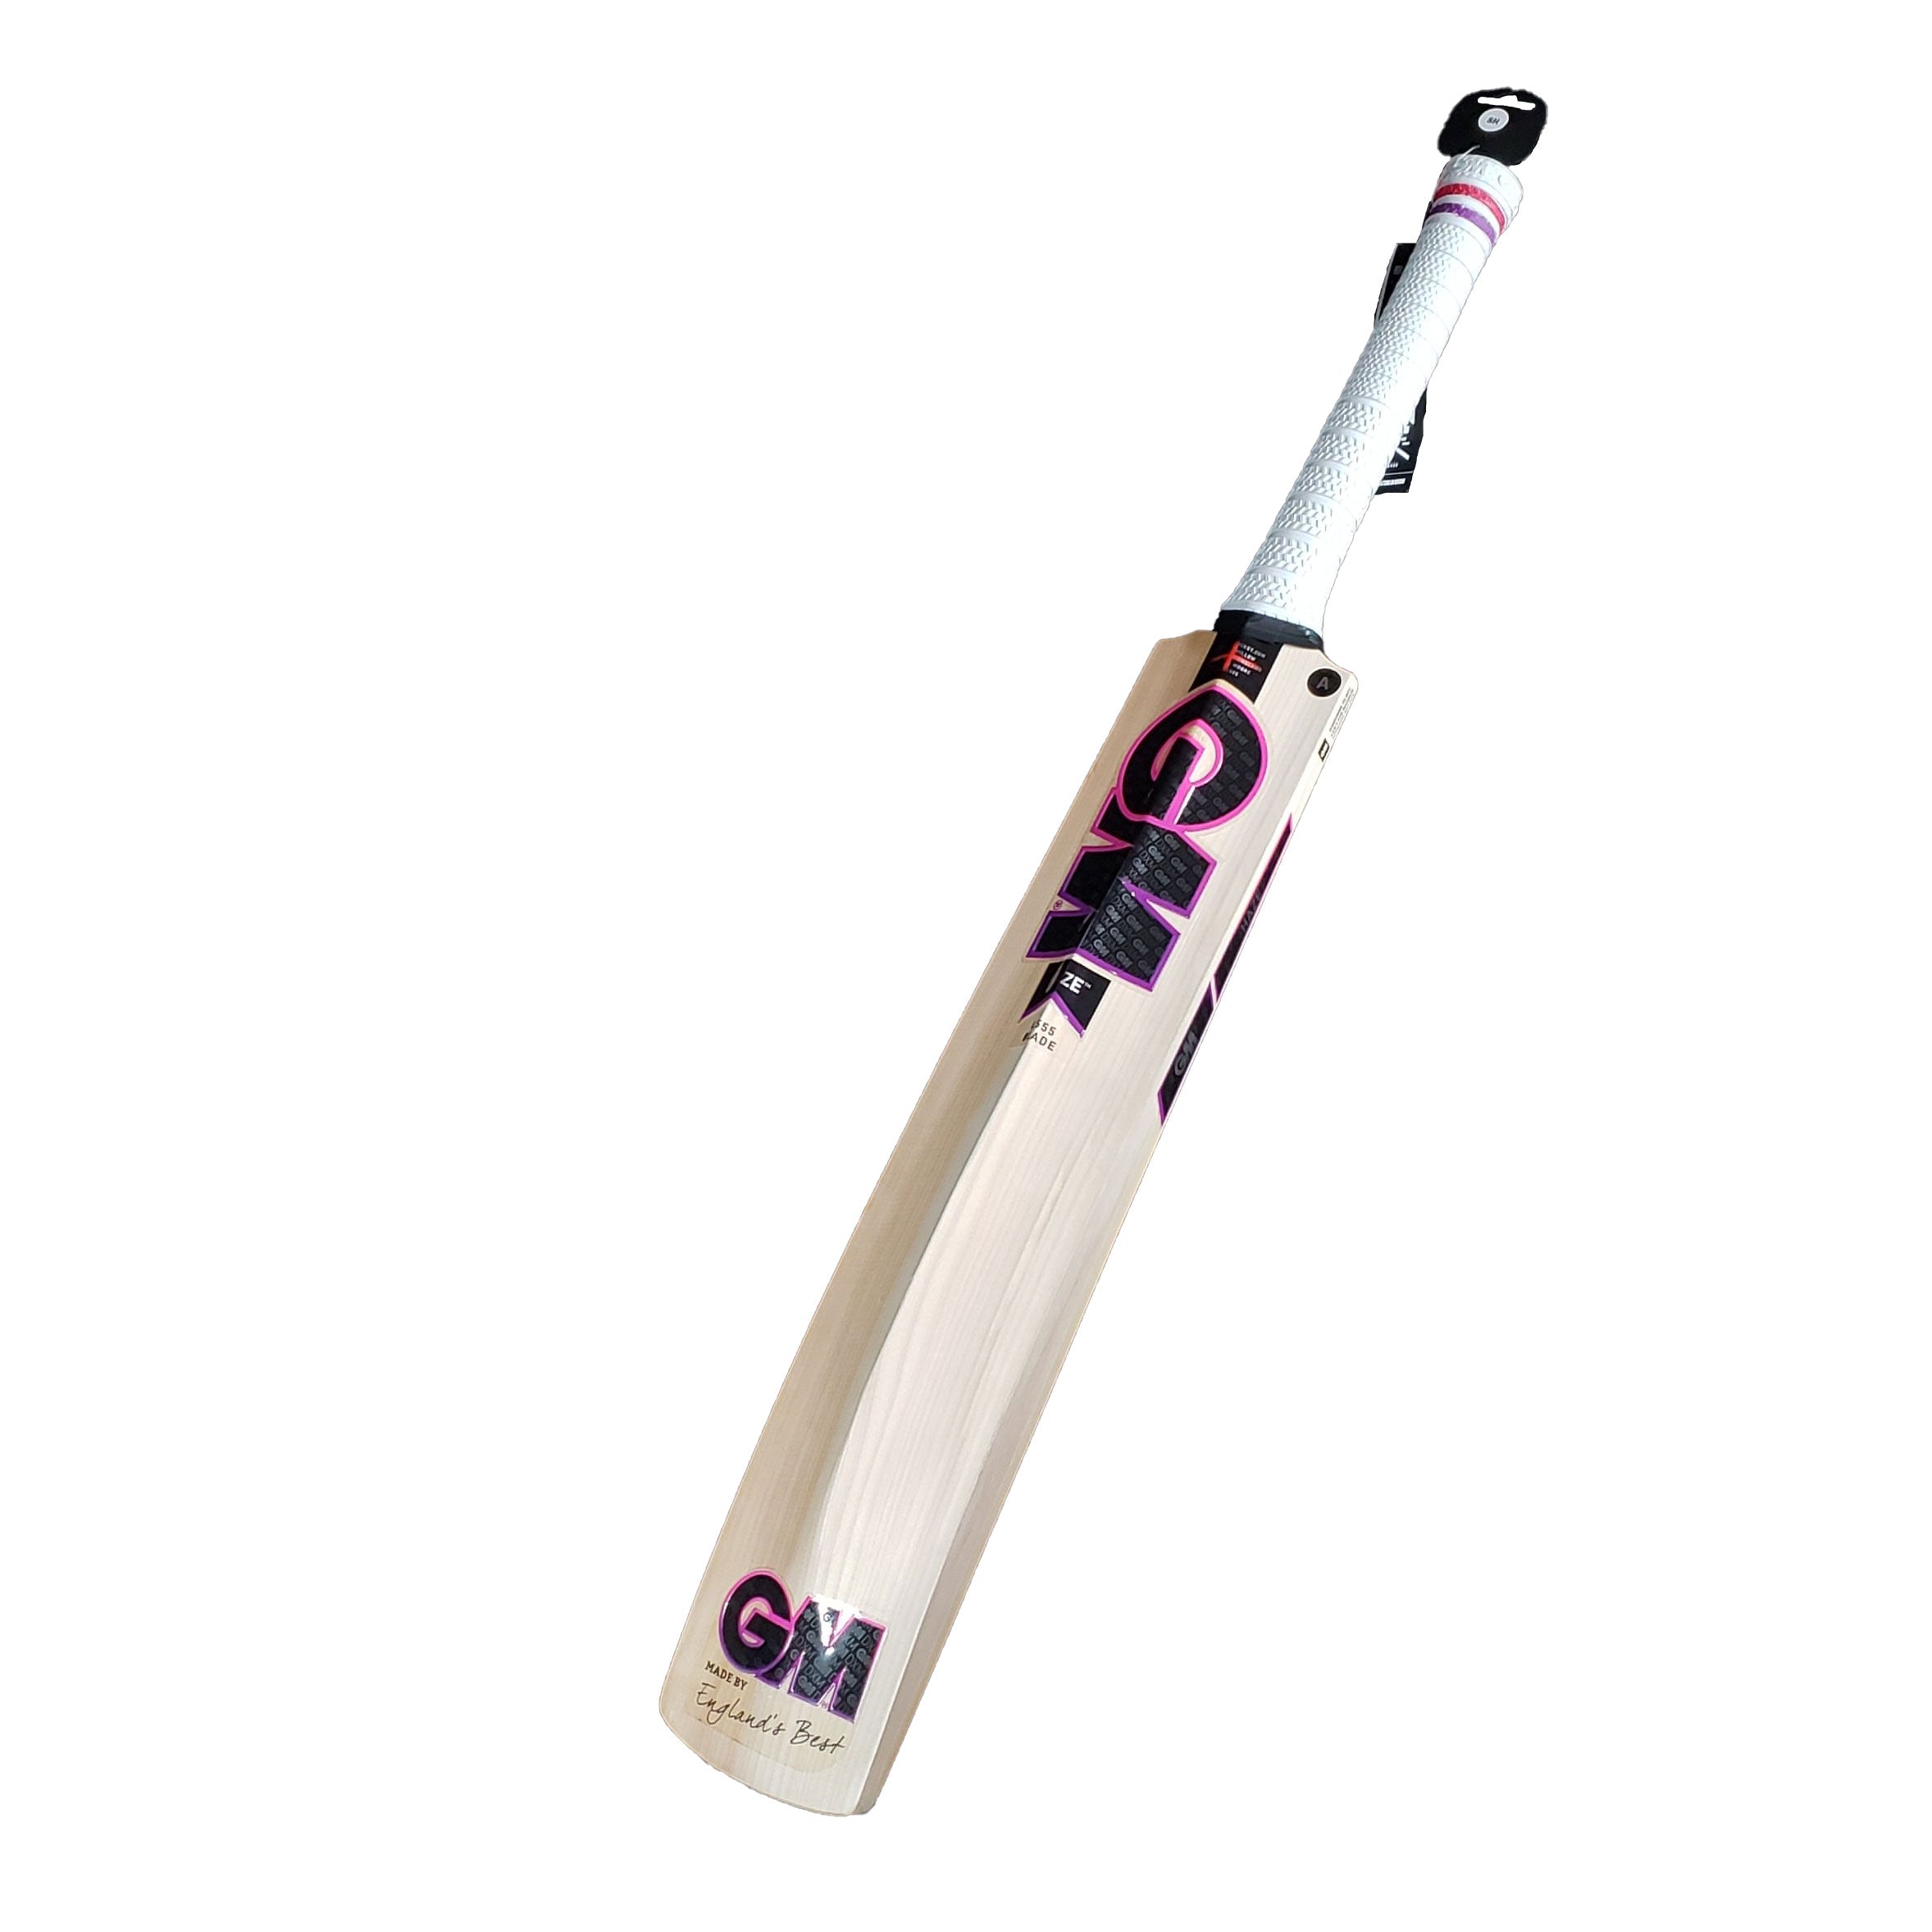 GM Cricket Bat Haze Signature Limited Edition Premium Bat